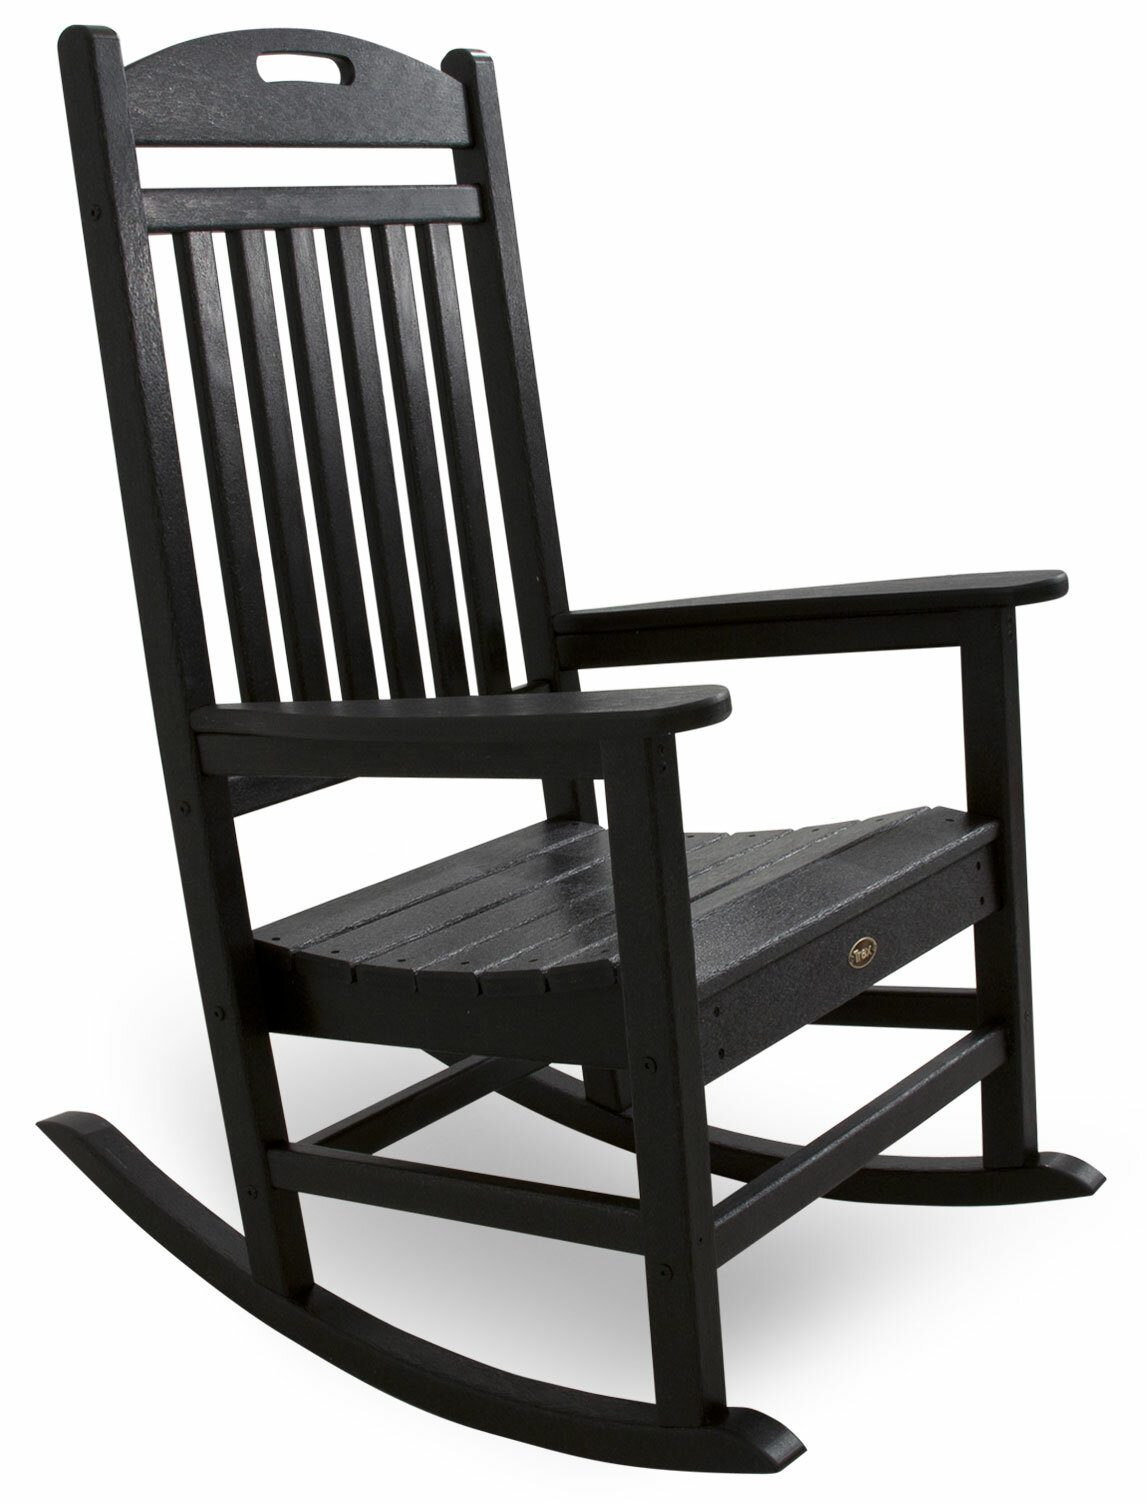 Black Rocking Chair Outdoor / Better Homes Gardens Shaker Black Steel